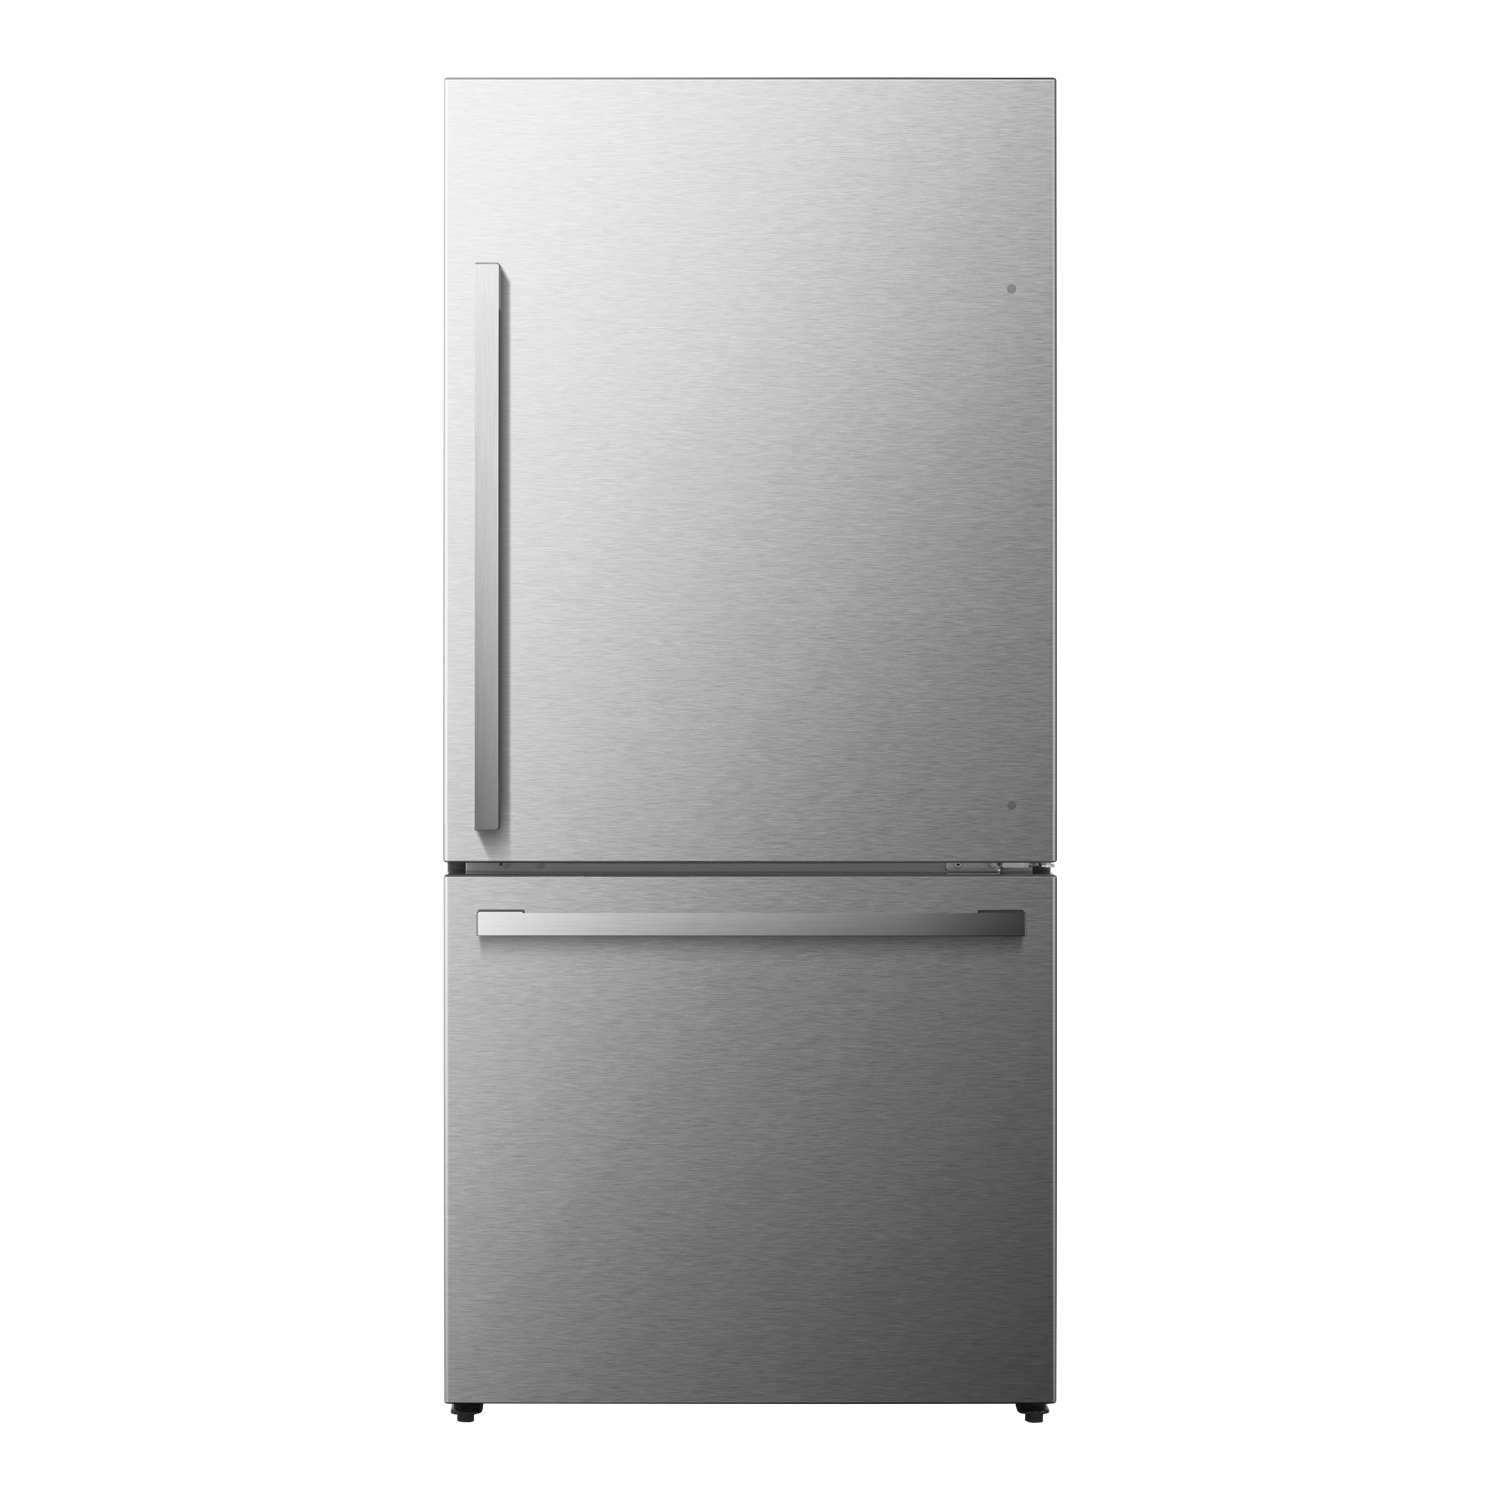 hisense-17-1-cu-ft-refrigerator-fingerprint-resistant-stainless-steel